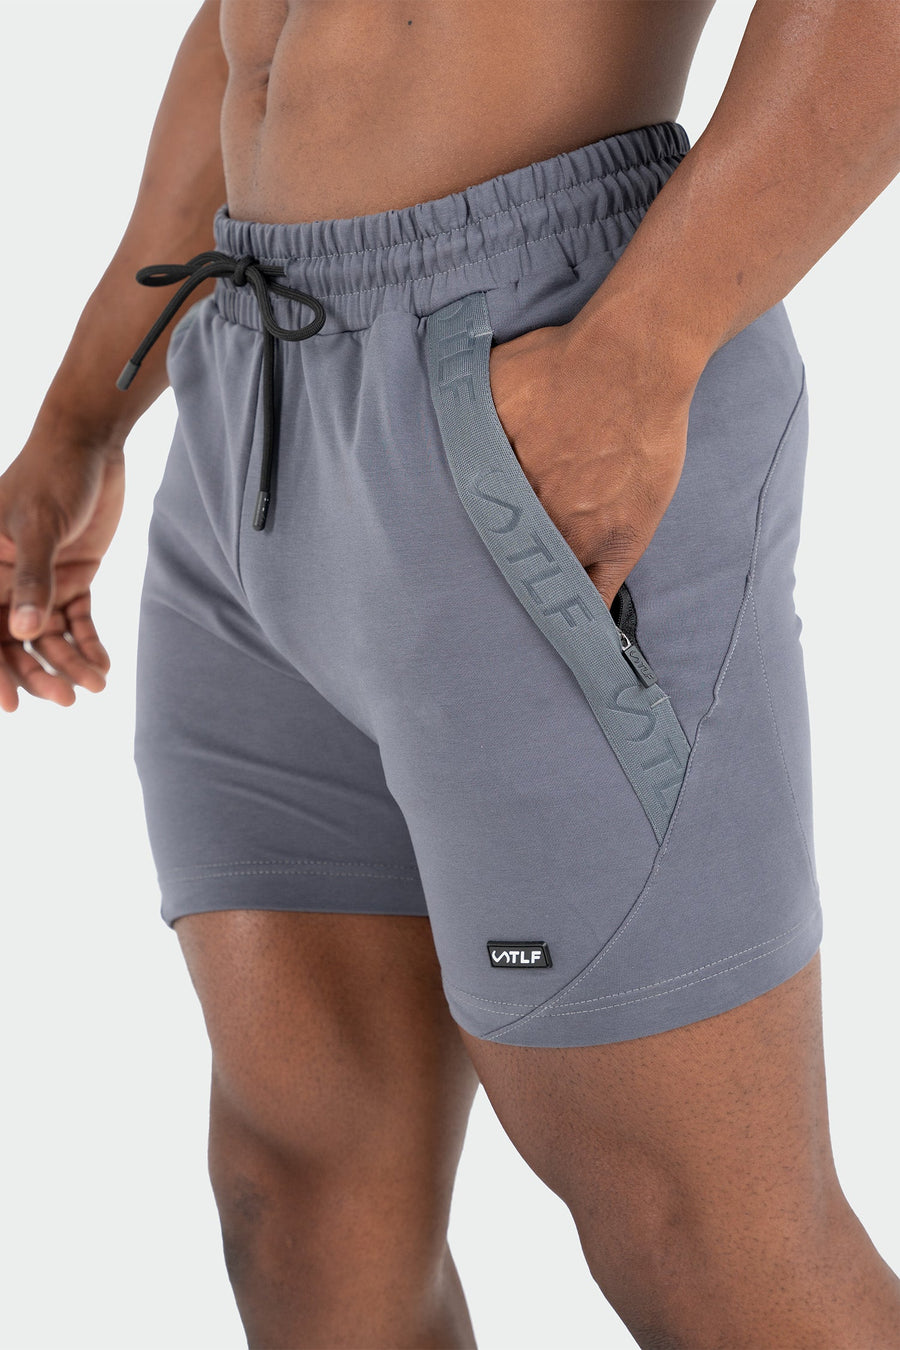 TLF Vital 5” Shorts - 5 Inch Inseam Shorts For Men – Gray - 2